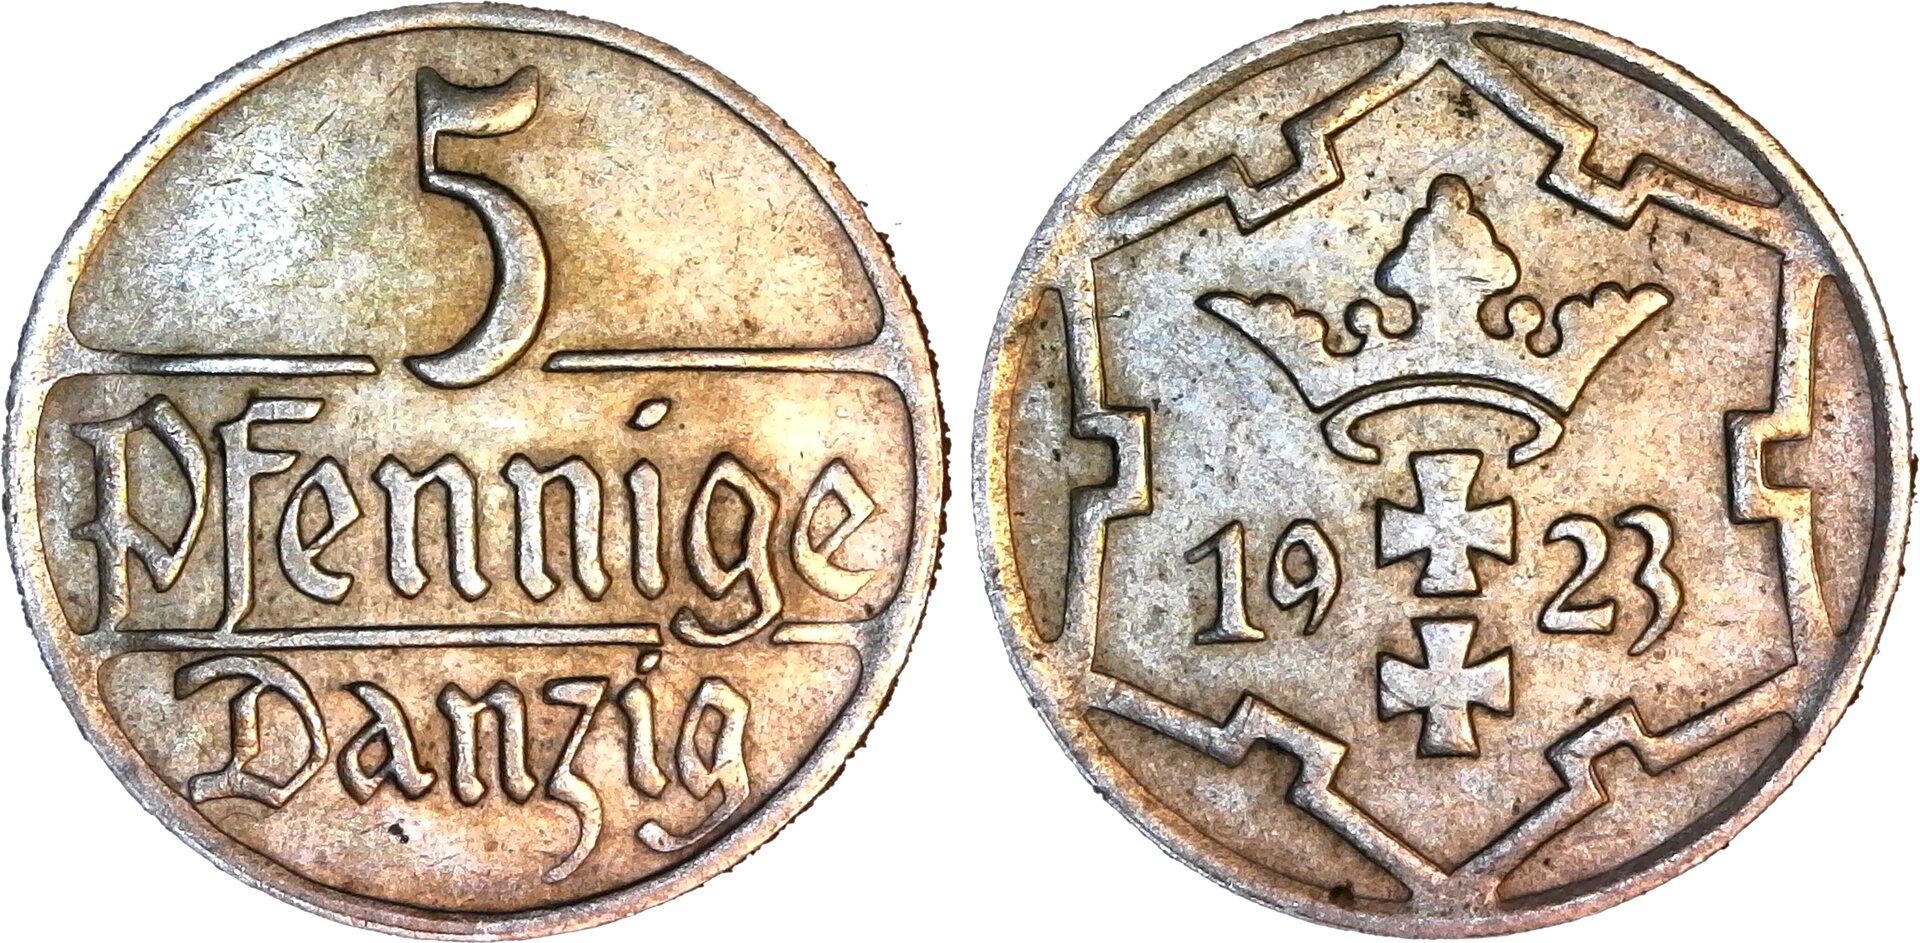 Danzig 5 Pfennige 1923 obverse-side-cutout.jpg